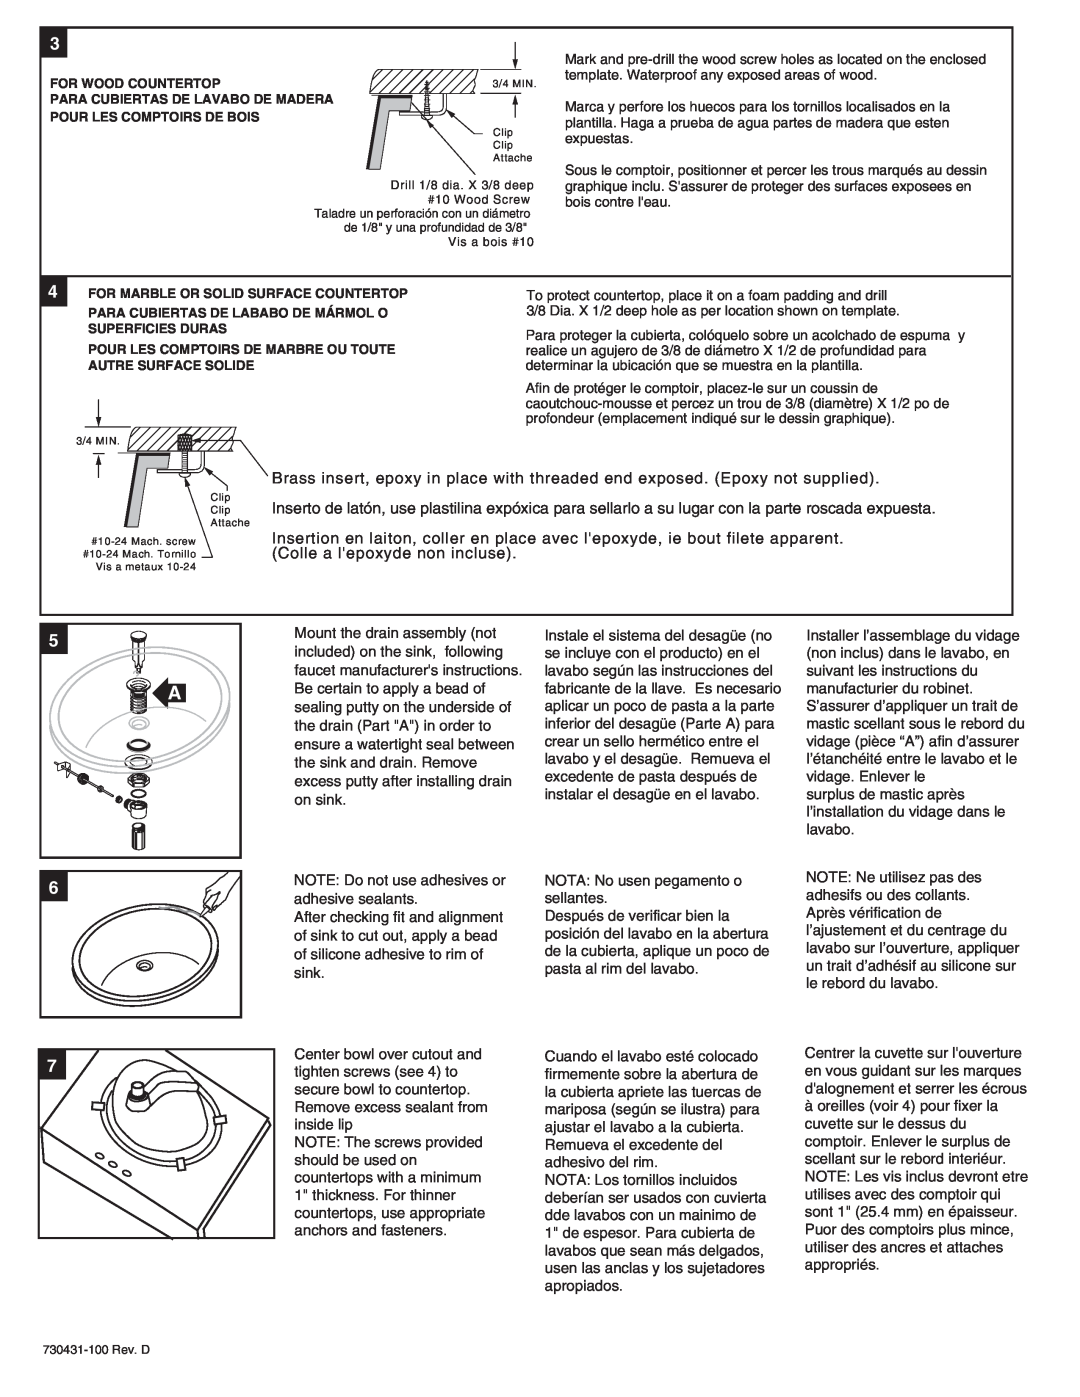 American Standard 0612, 0632 installation instructions 